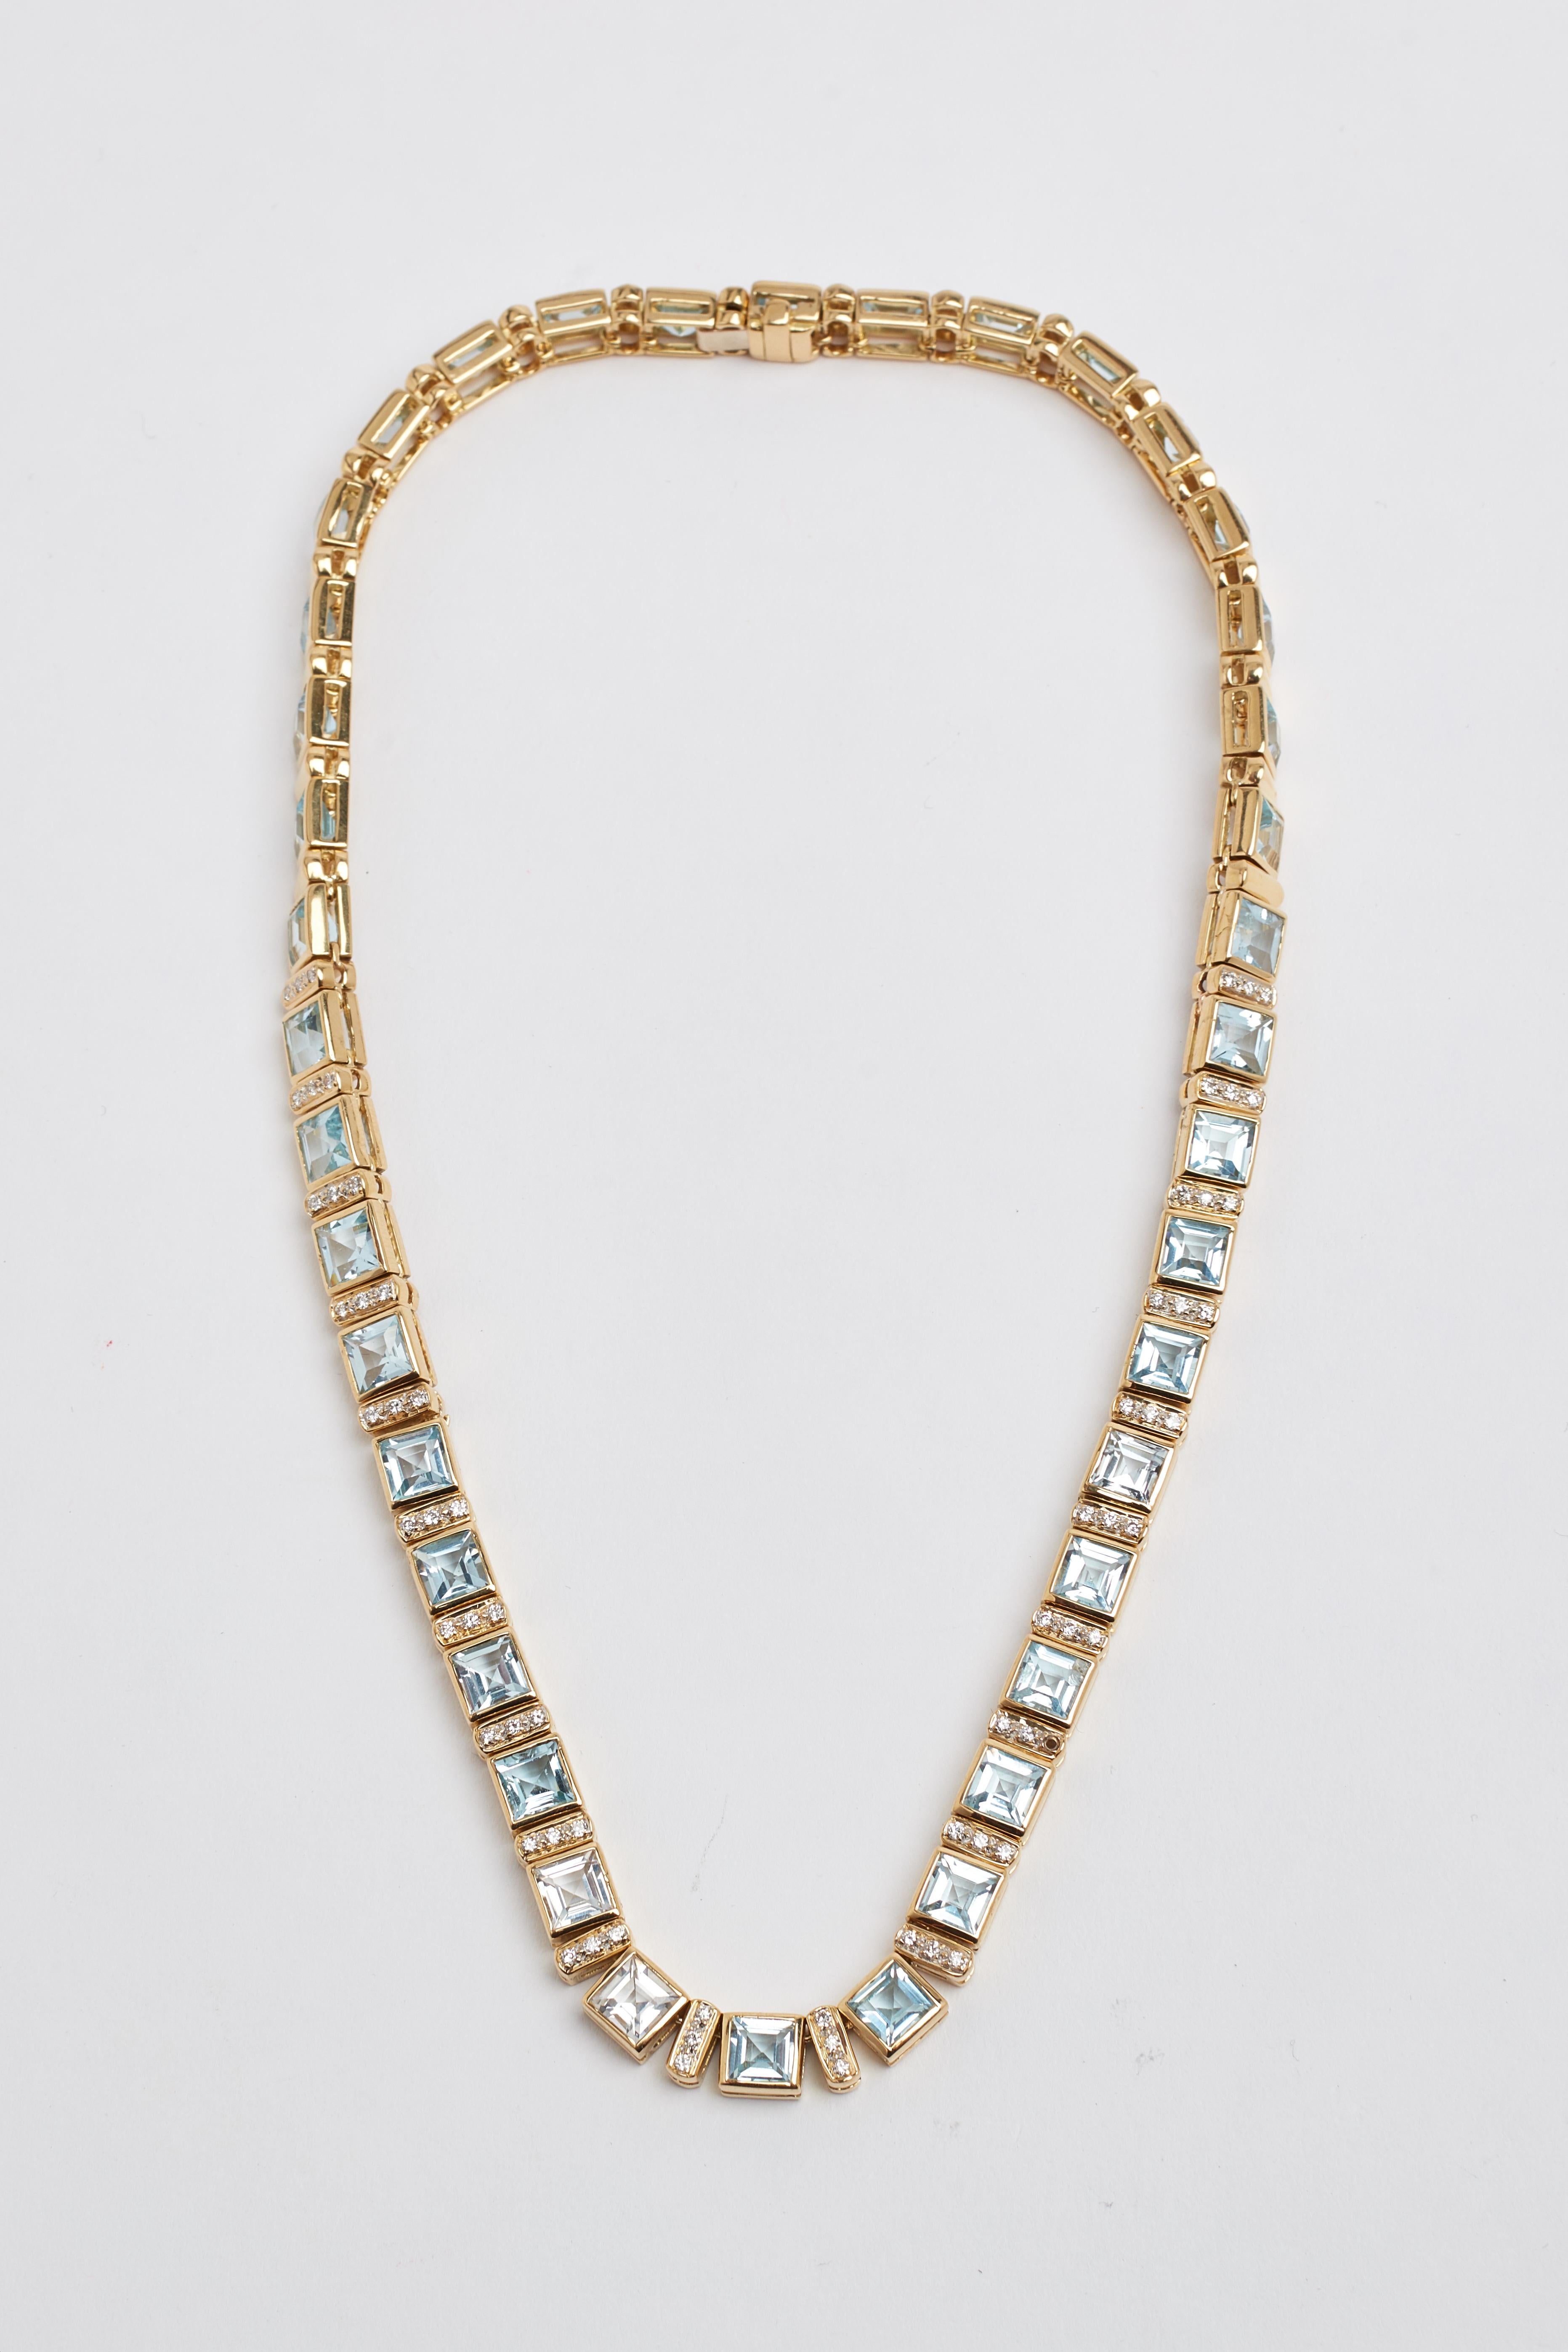 Blue Topaz and Diamond Necklace 1